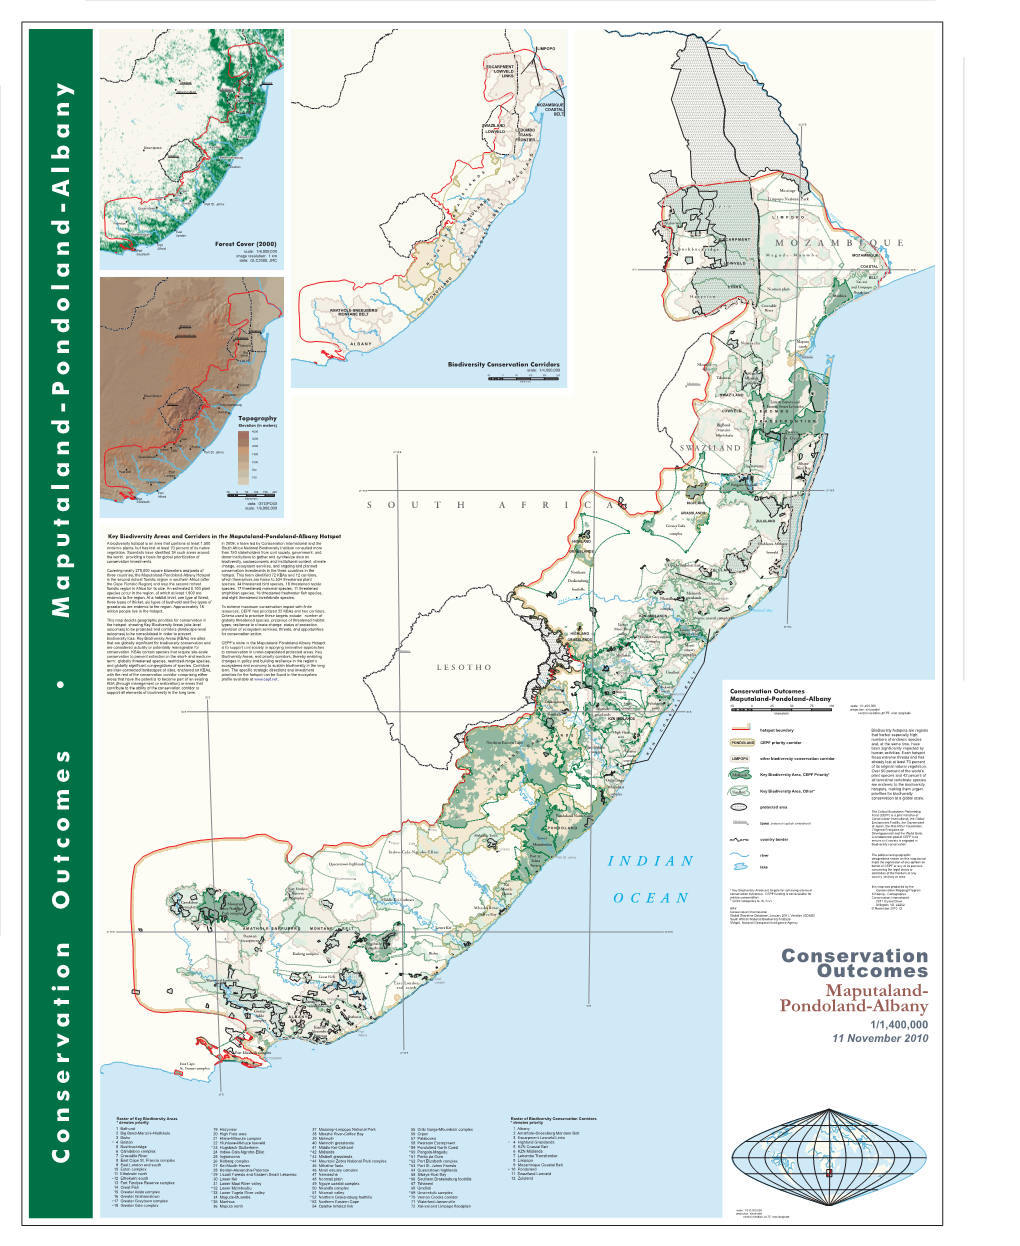 Map: Conservation Outcomes Maputaland-Pondoland-Albany 2010 English Pdf 2.84 MB